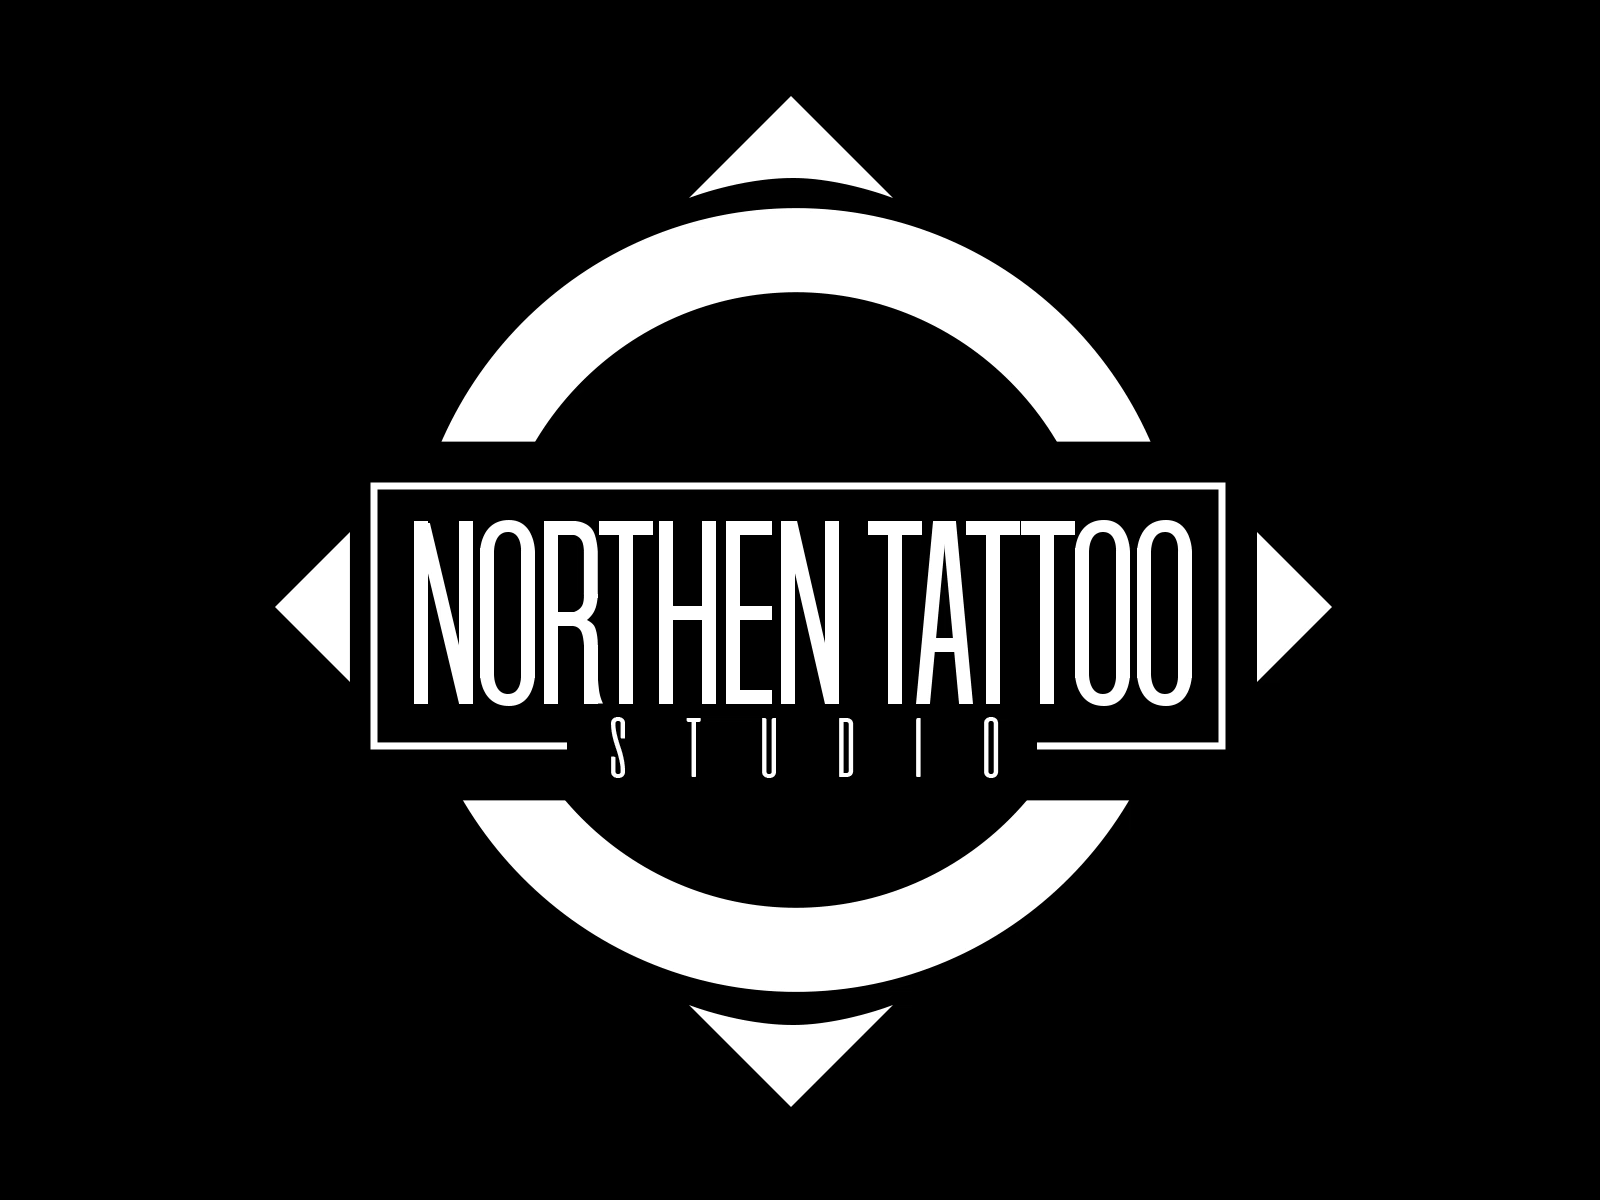 Northen tattoo Studio